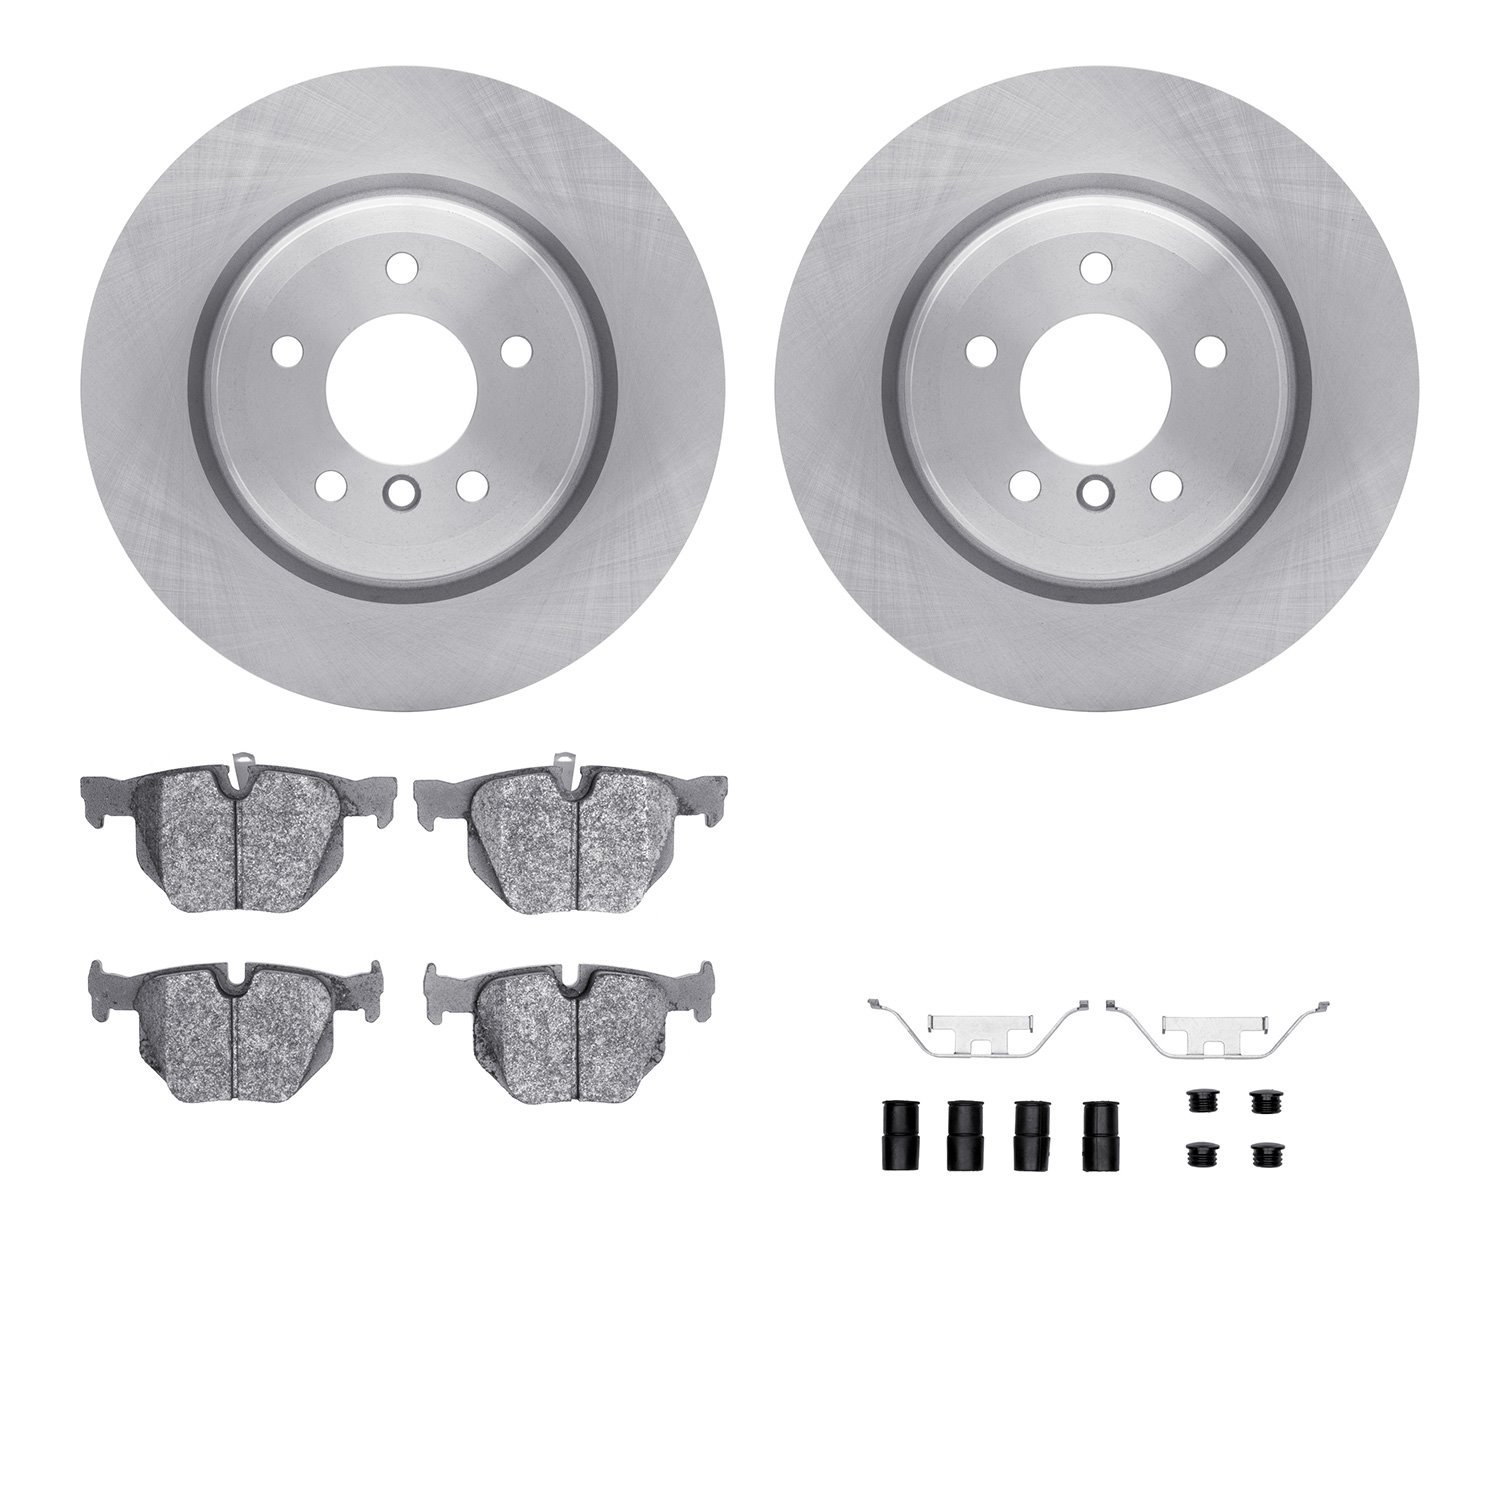 6312-31091 Brake Rotors with 3000-Series Ceramic Brake Pads Kit with Hardware, 2006-2015 BMW, Position: Rear